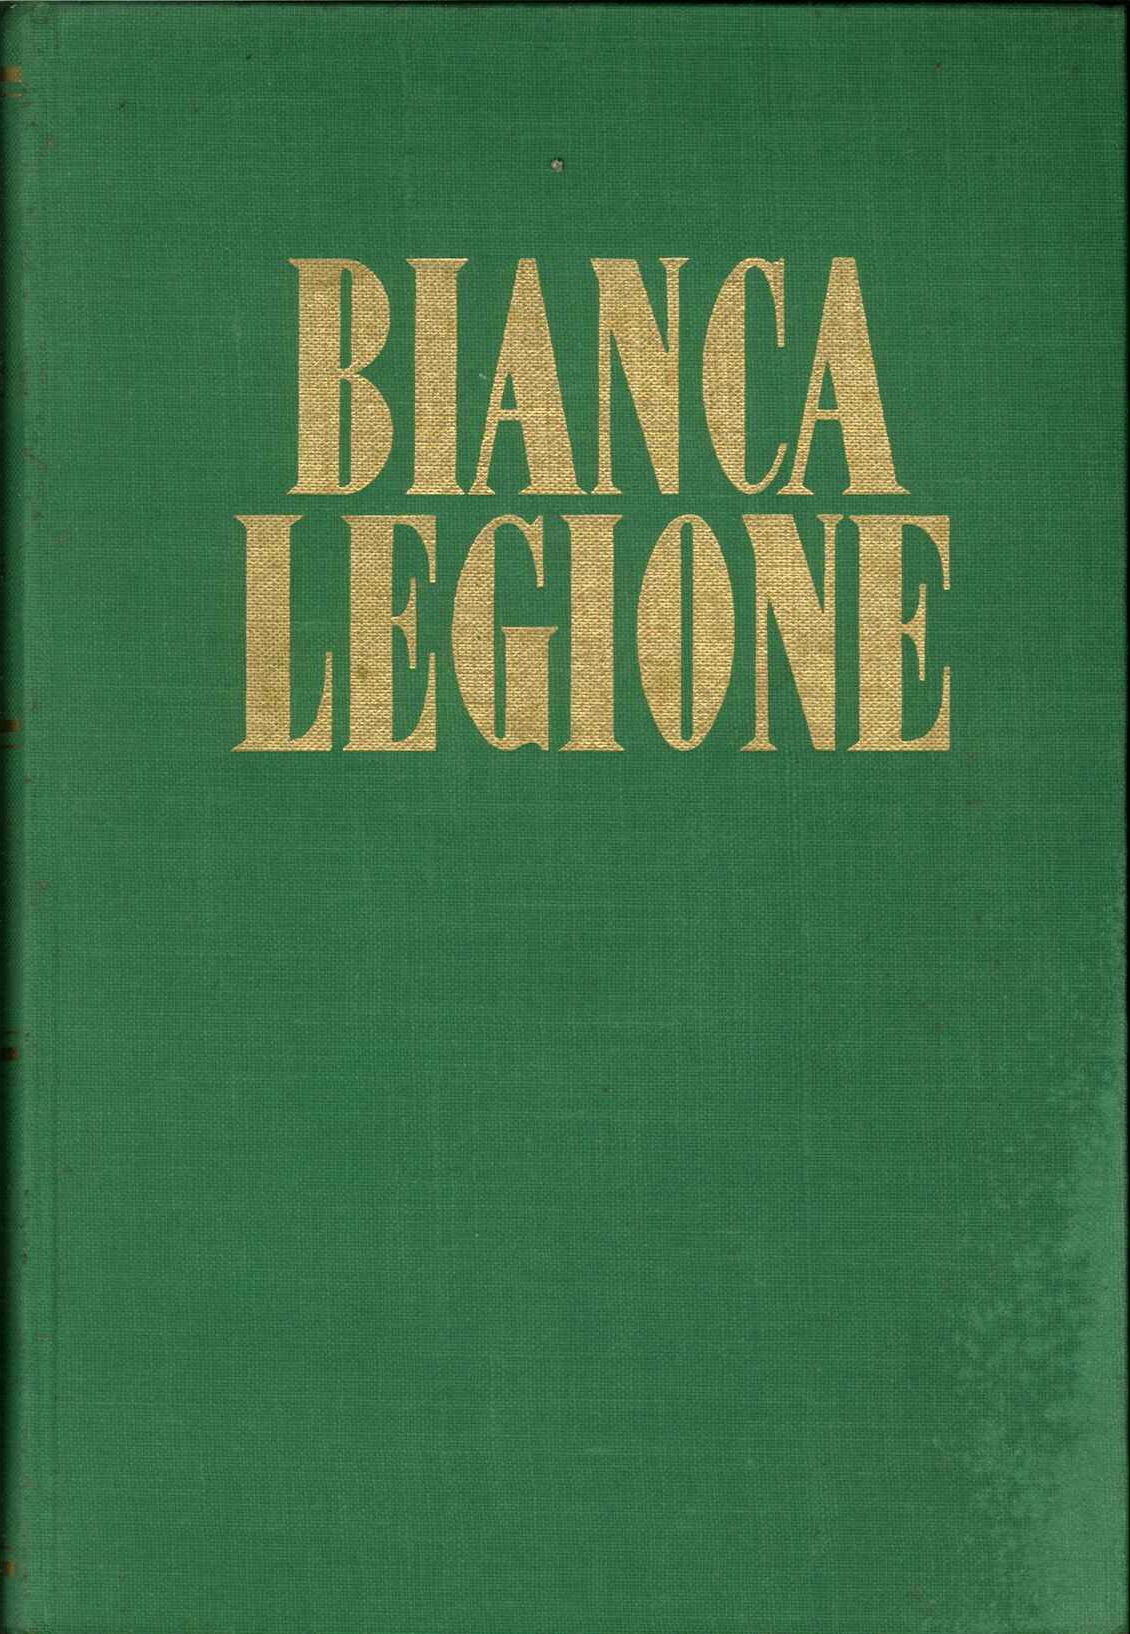 Bianca legione